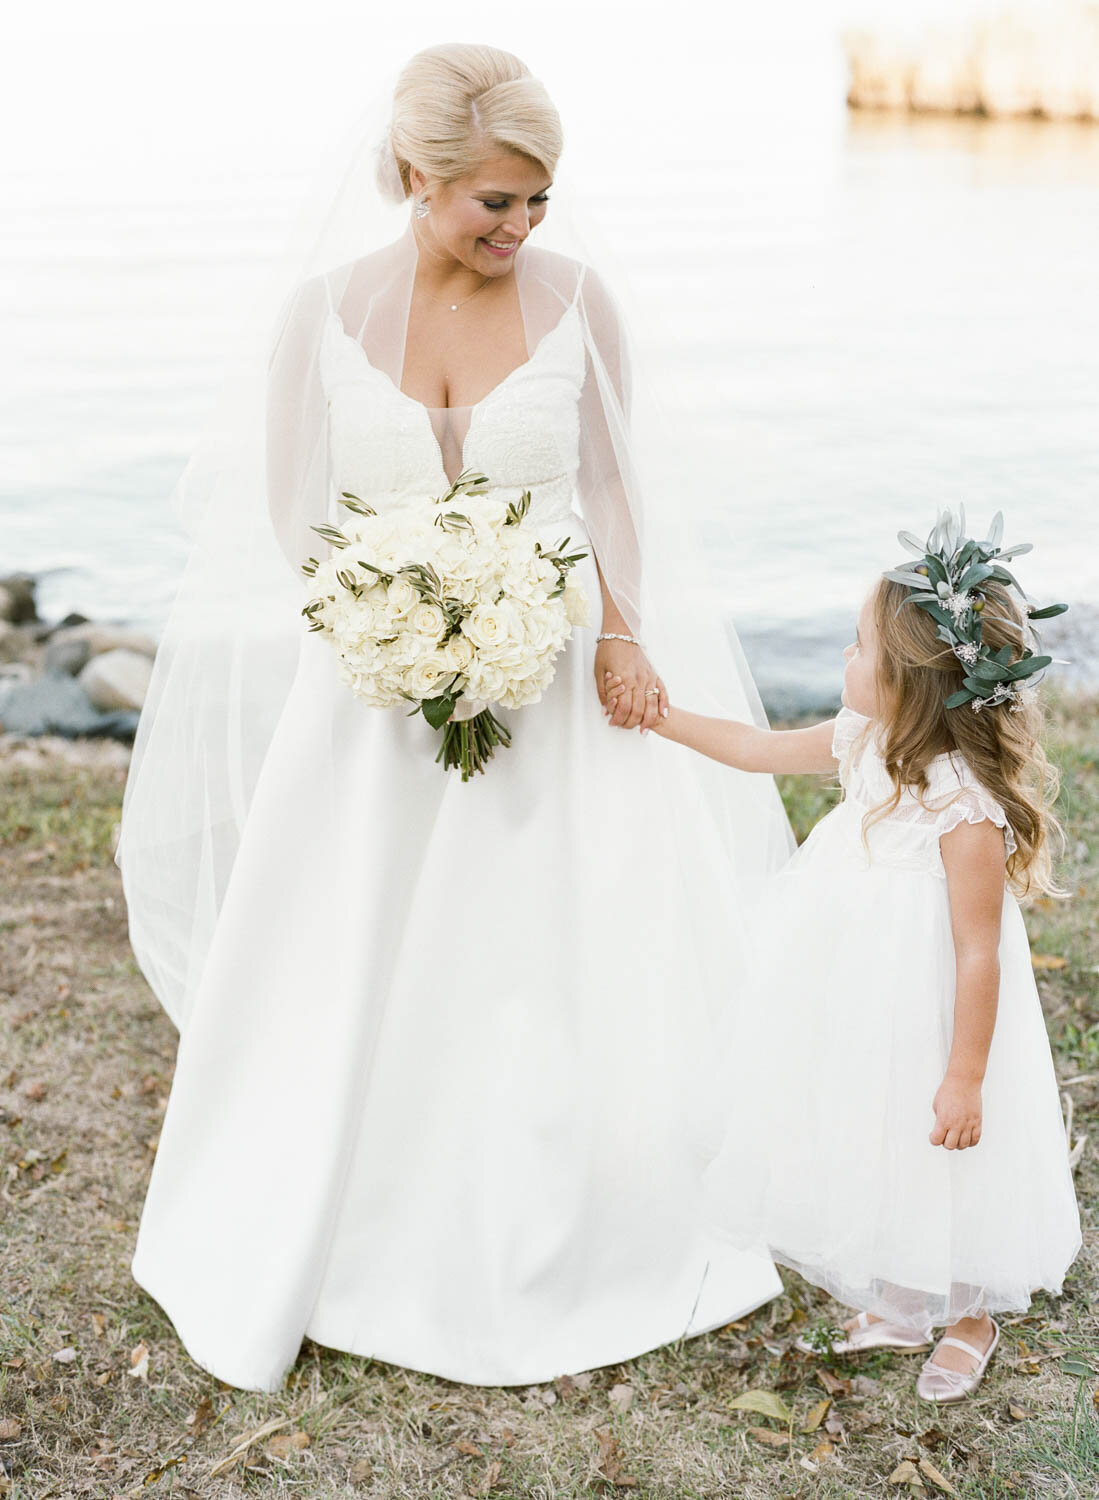 Easternshore-wedding-Lisa-Blume-Photography-7.jpg